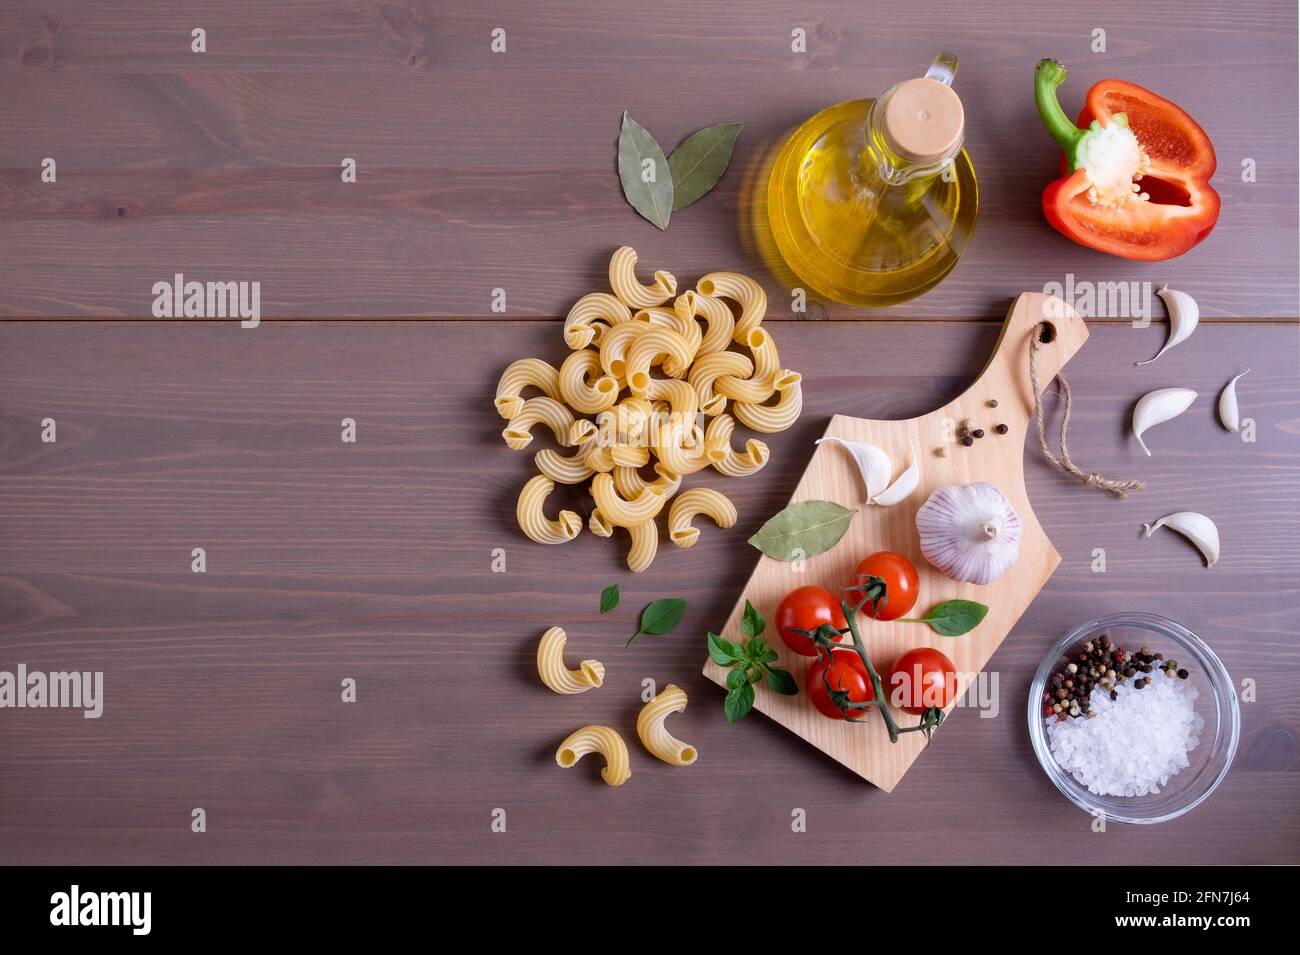 Ingredients for making Italian pasta Stock Photo